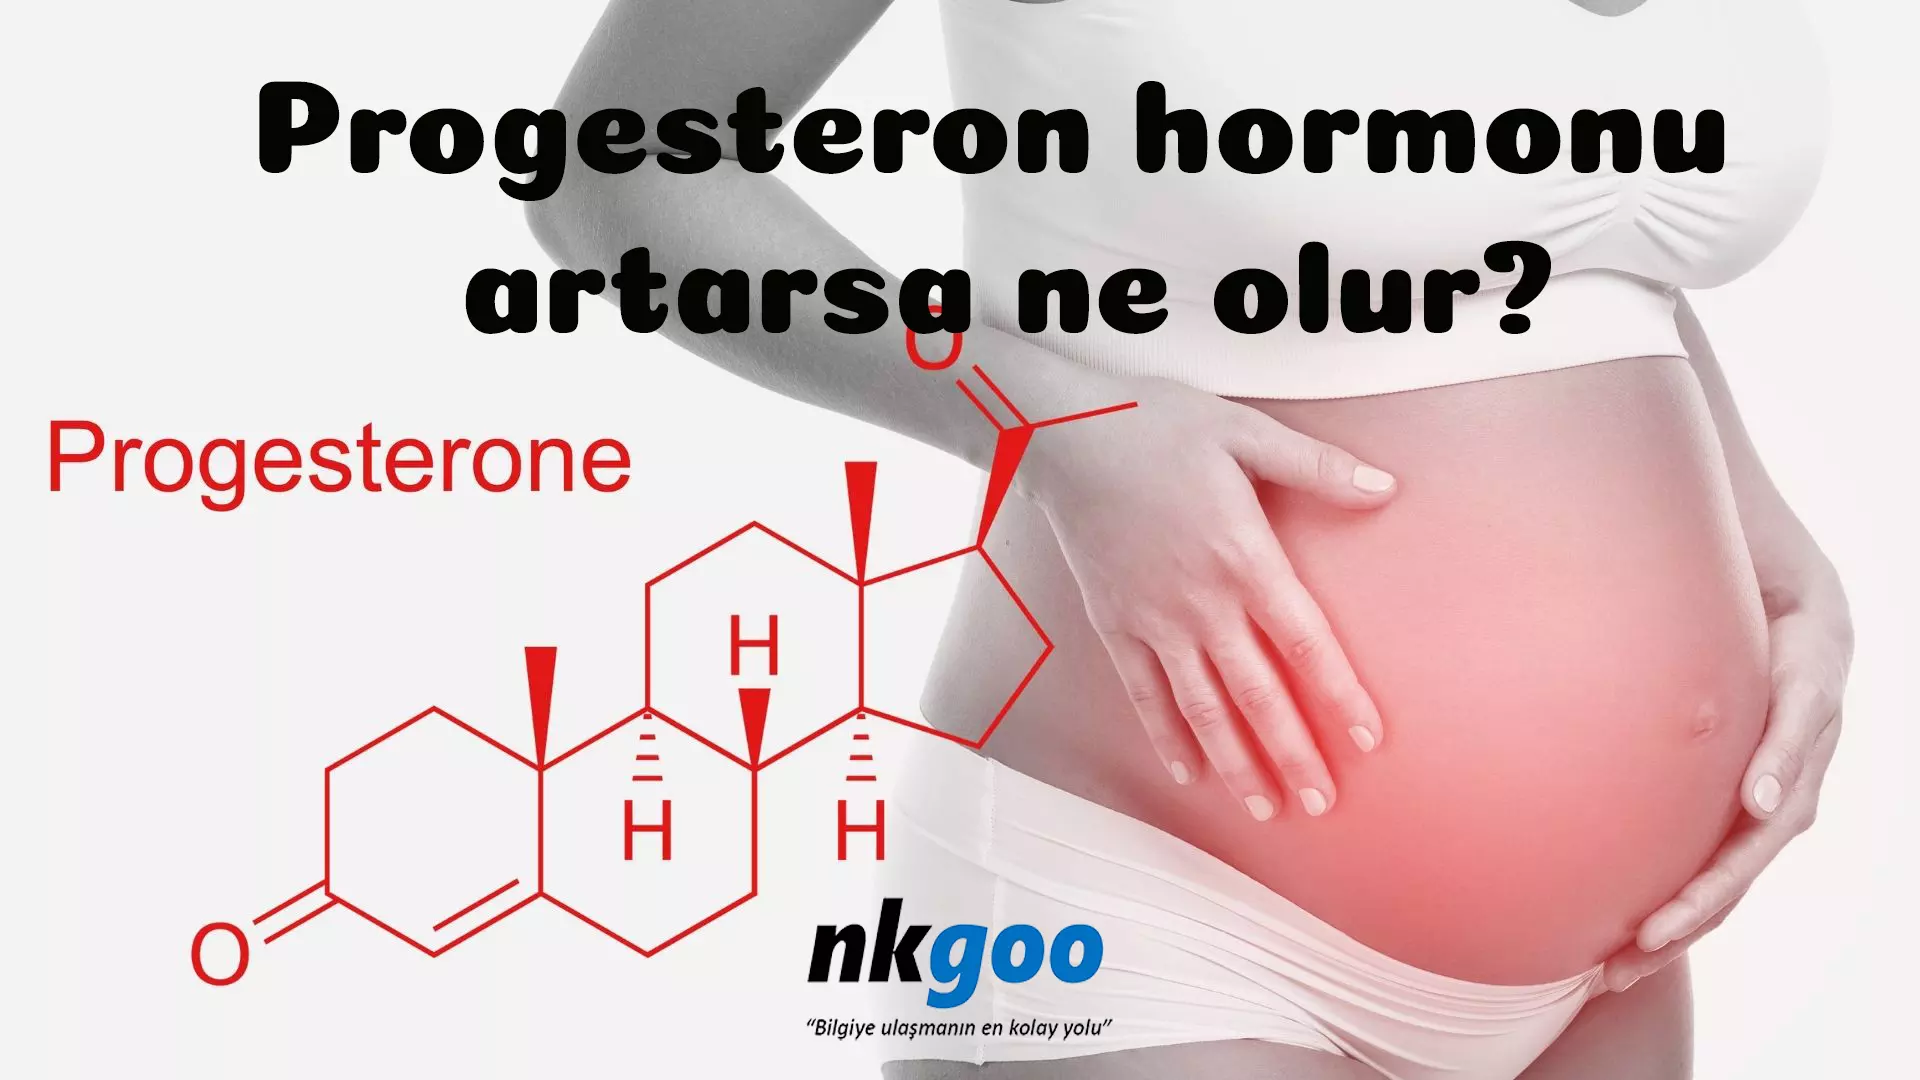 Progesteron hormonu artarsa ne olur?